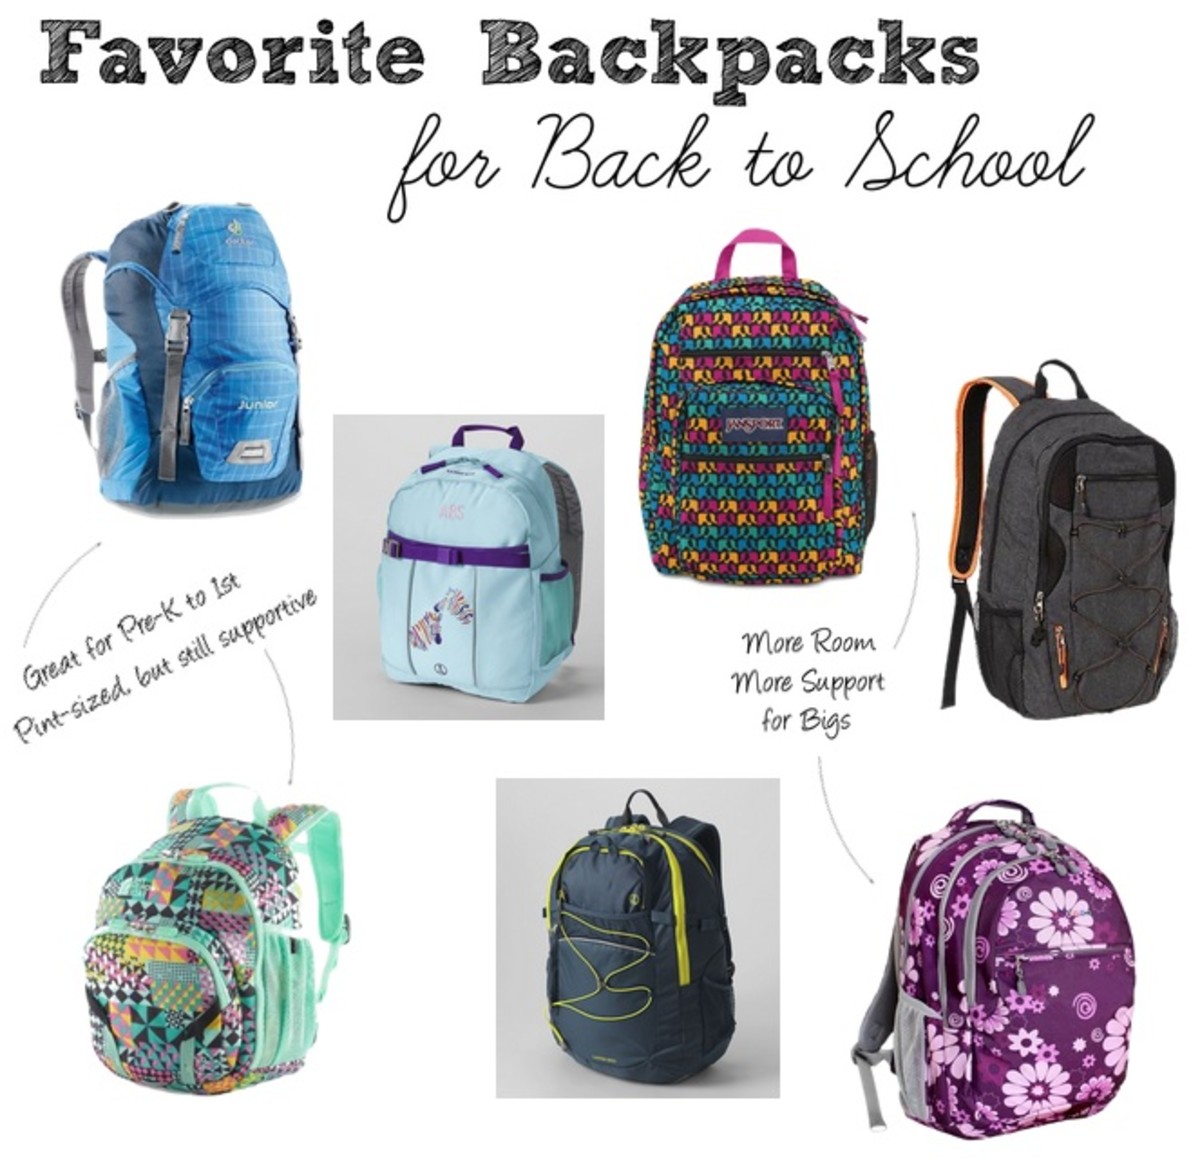 Favorite Backpacks for Back to School